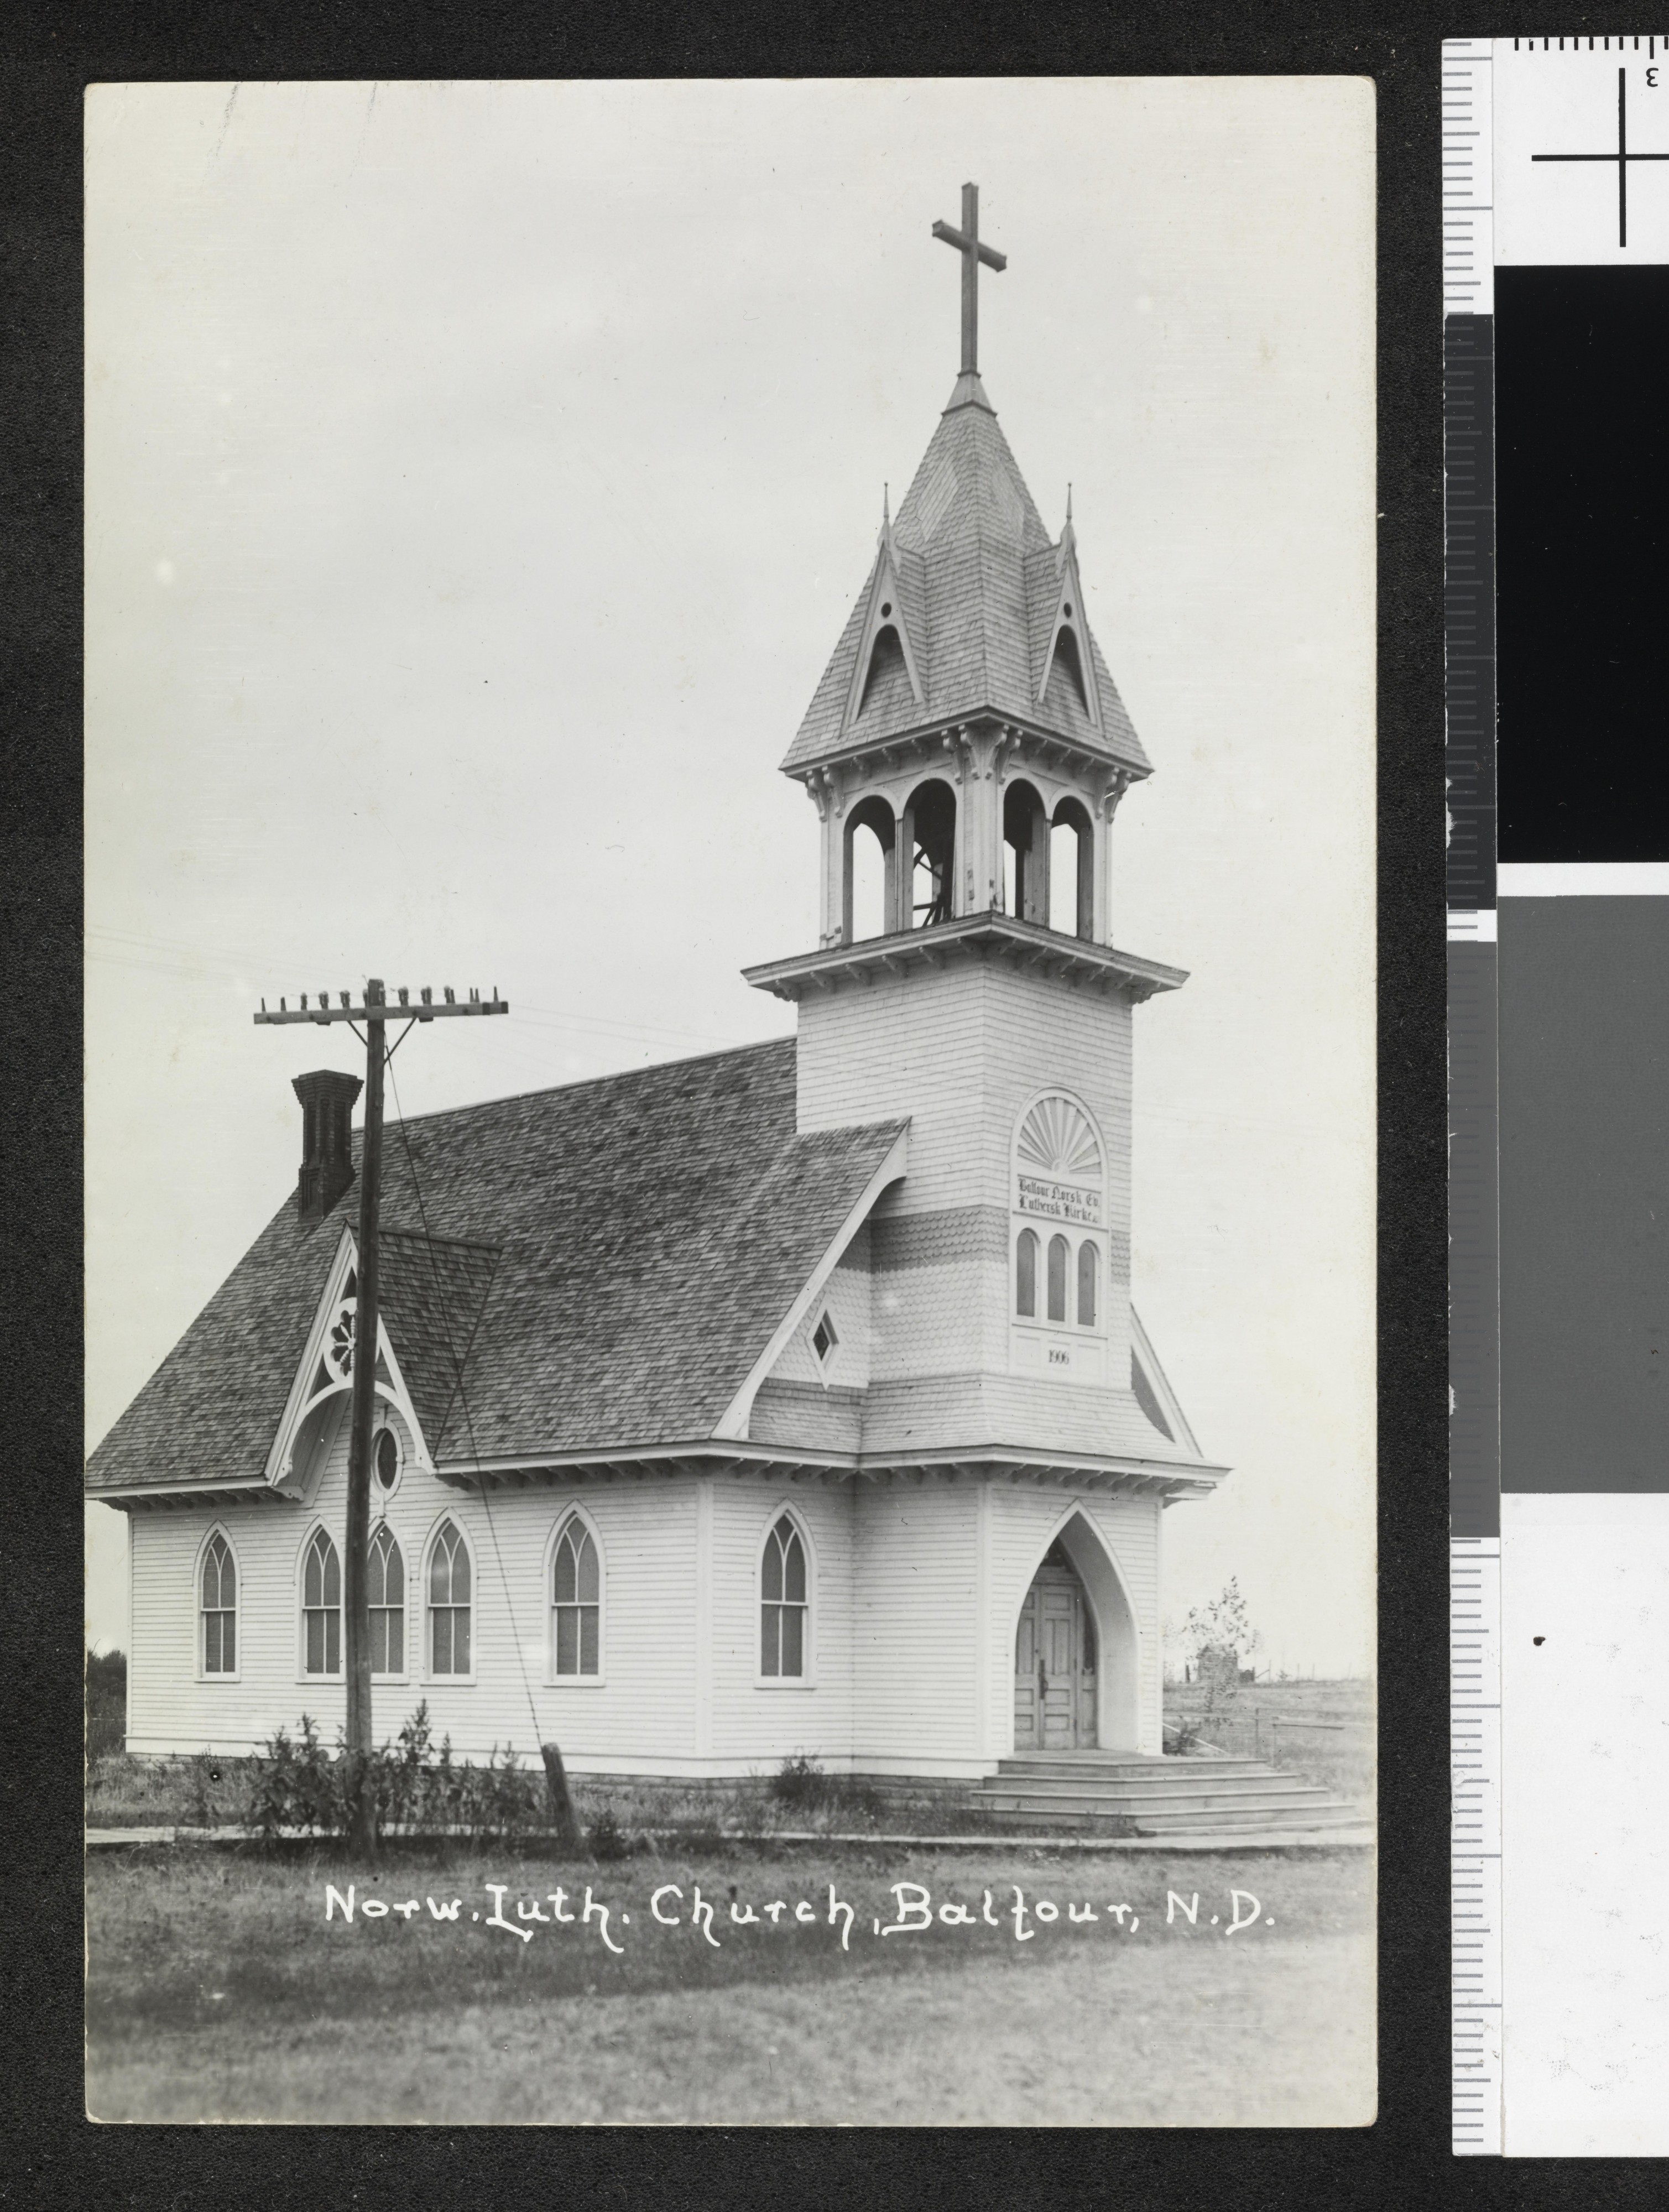 Norw. Lutch. Church, Balfour, N. D. - no-nb digifoto 20151127 00001 blds 07356